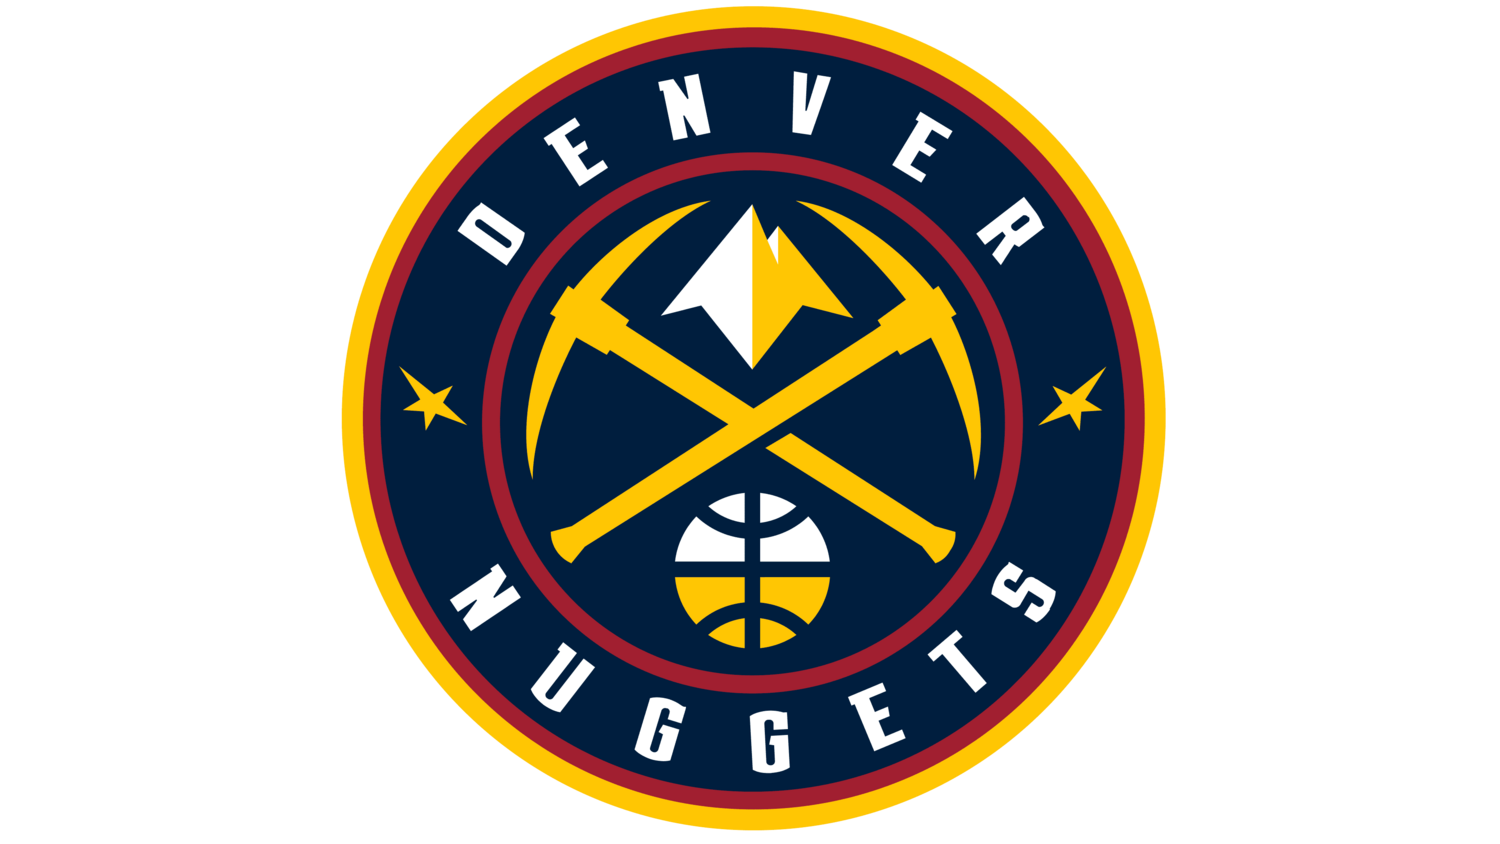 2021-2022 Denver (N) - BL team sheet